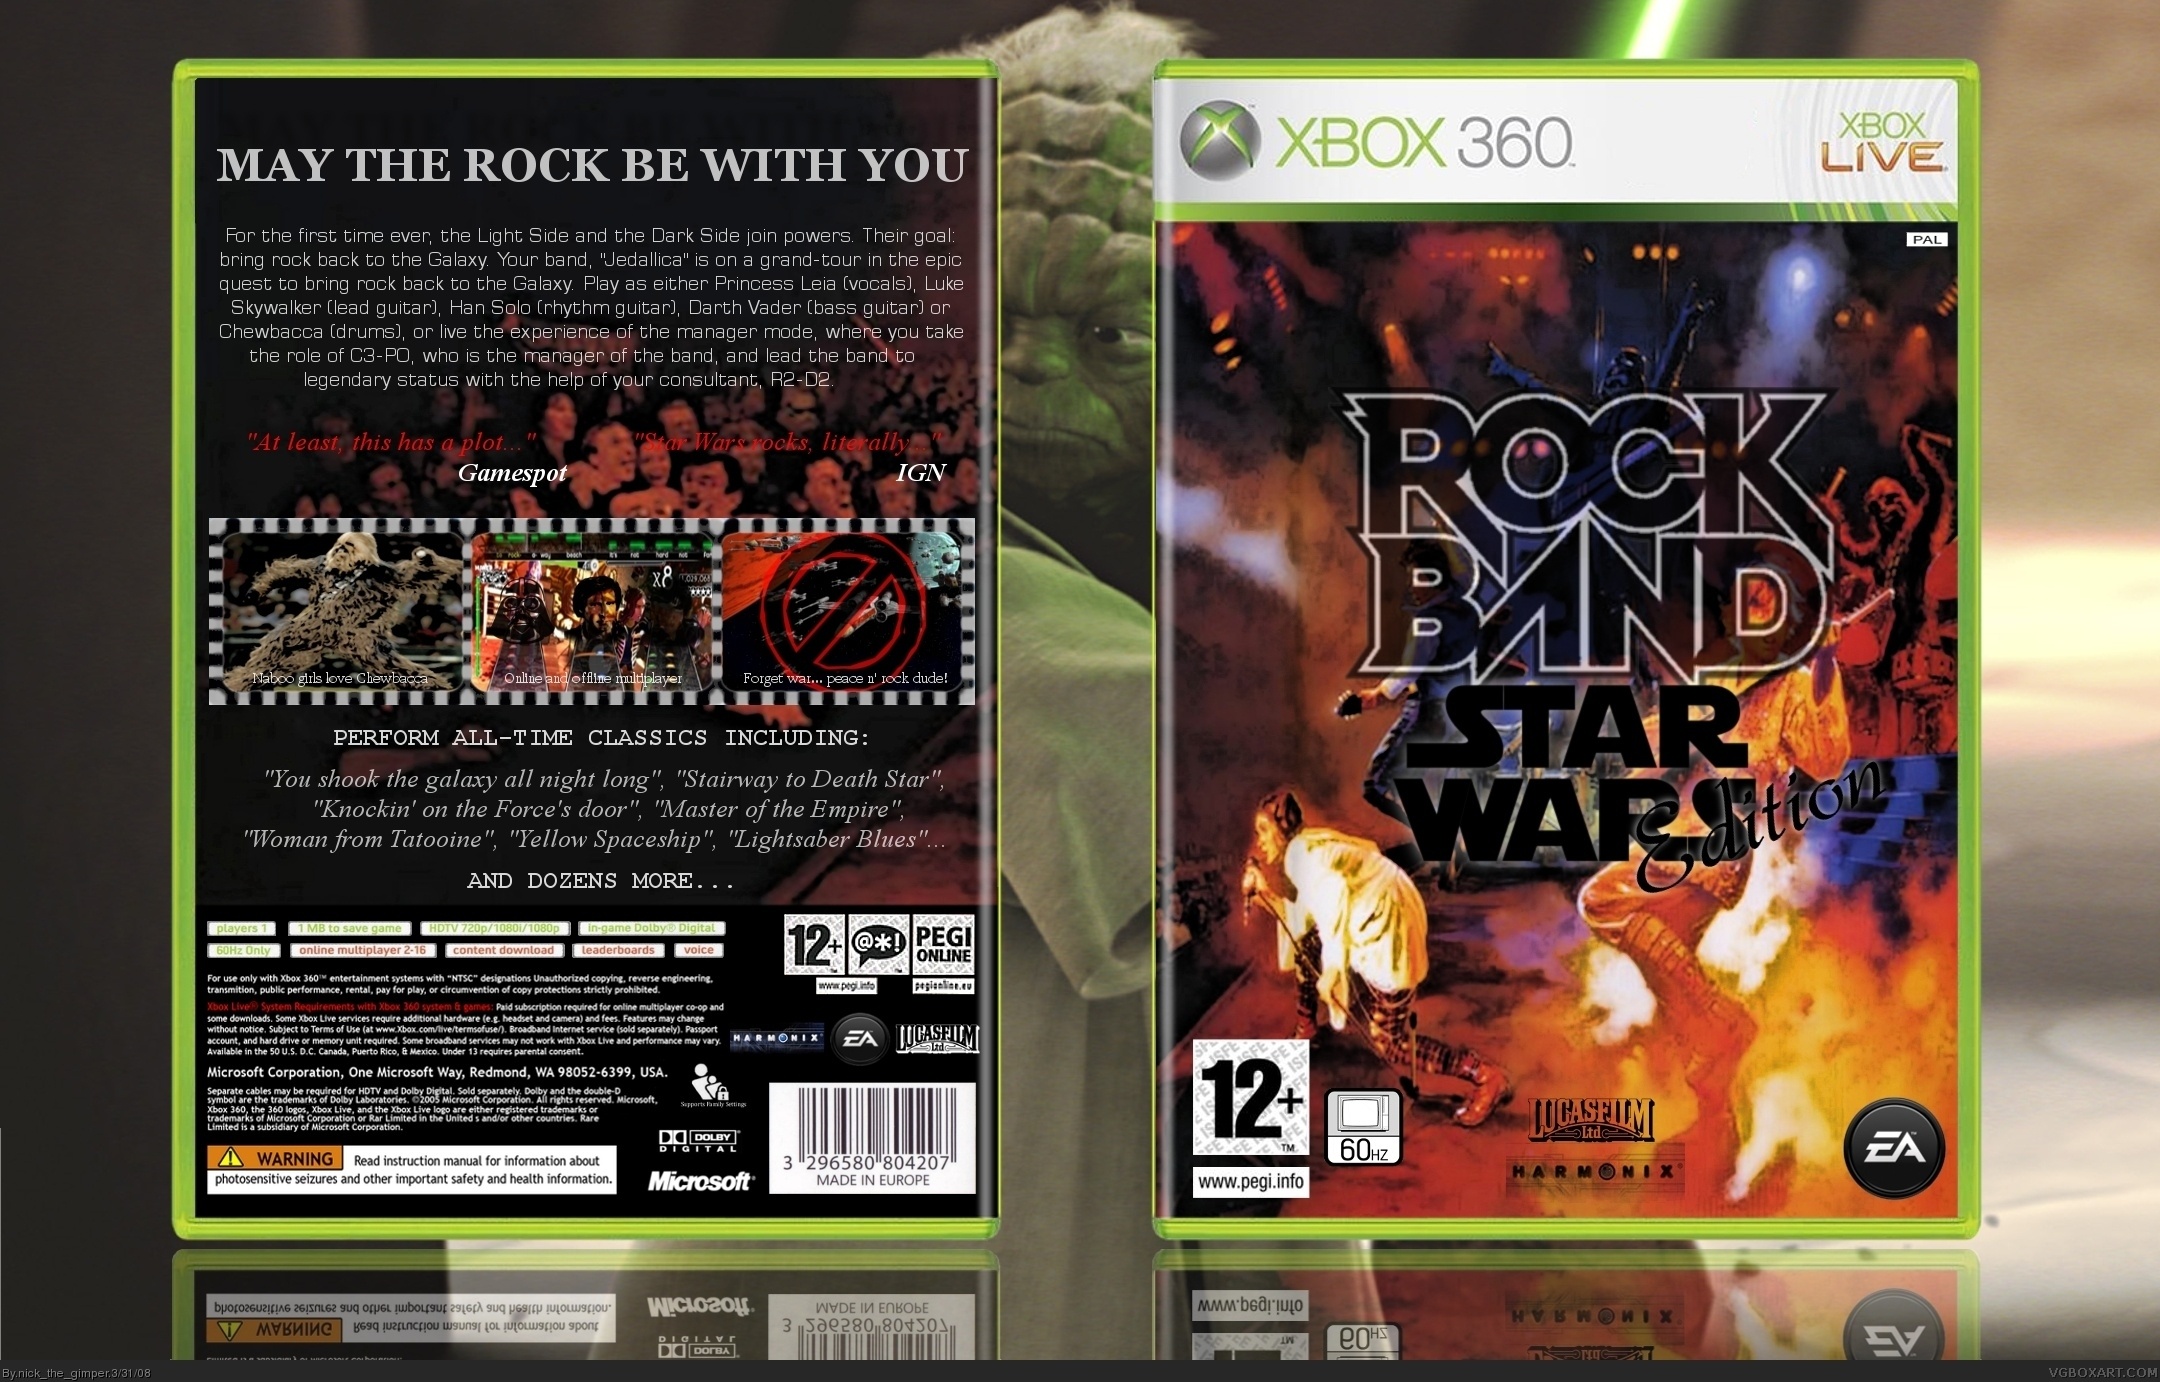 Rock Band: Star Wars Edition box cover